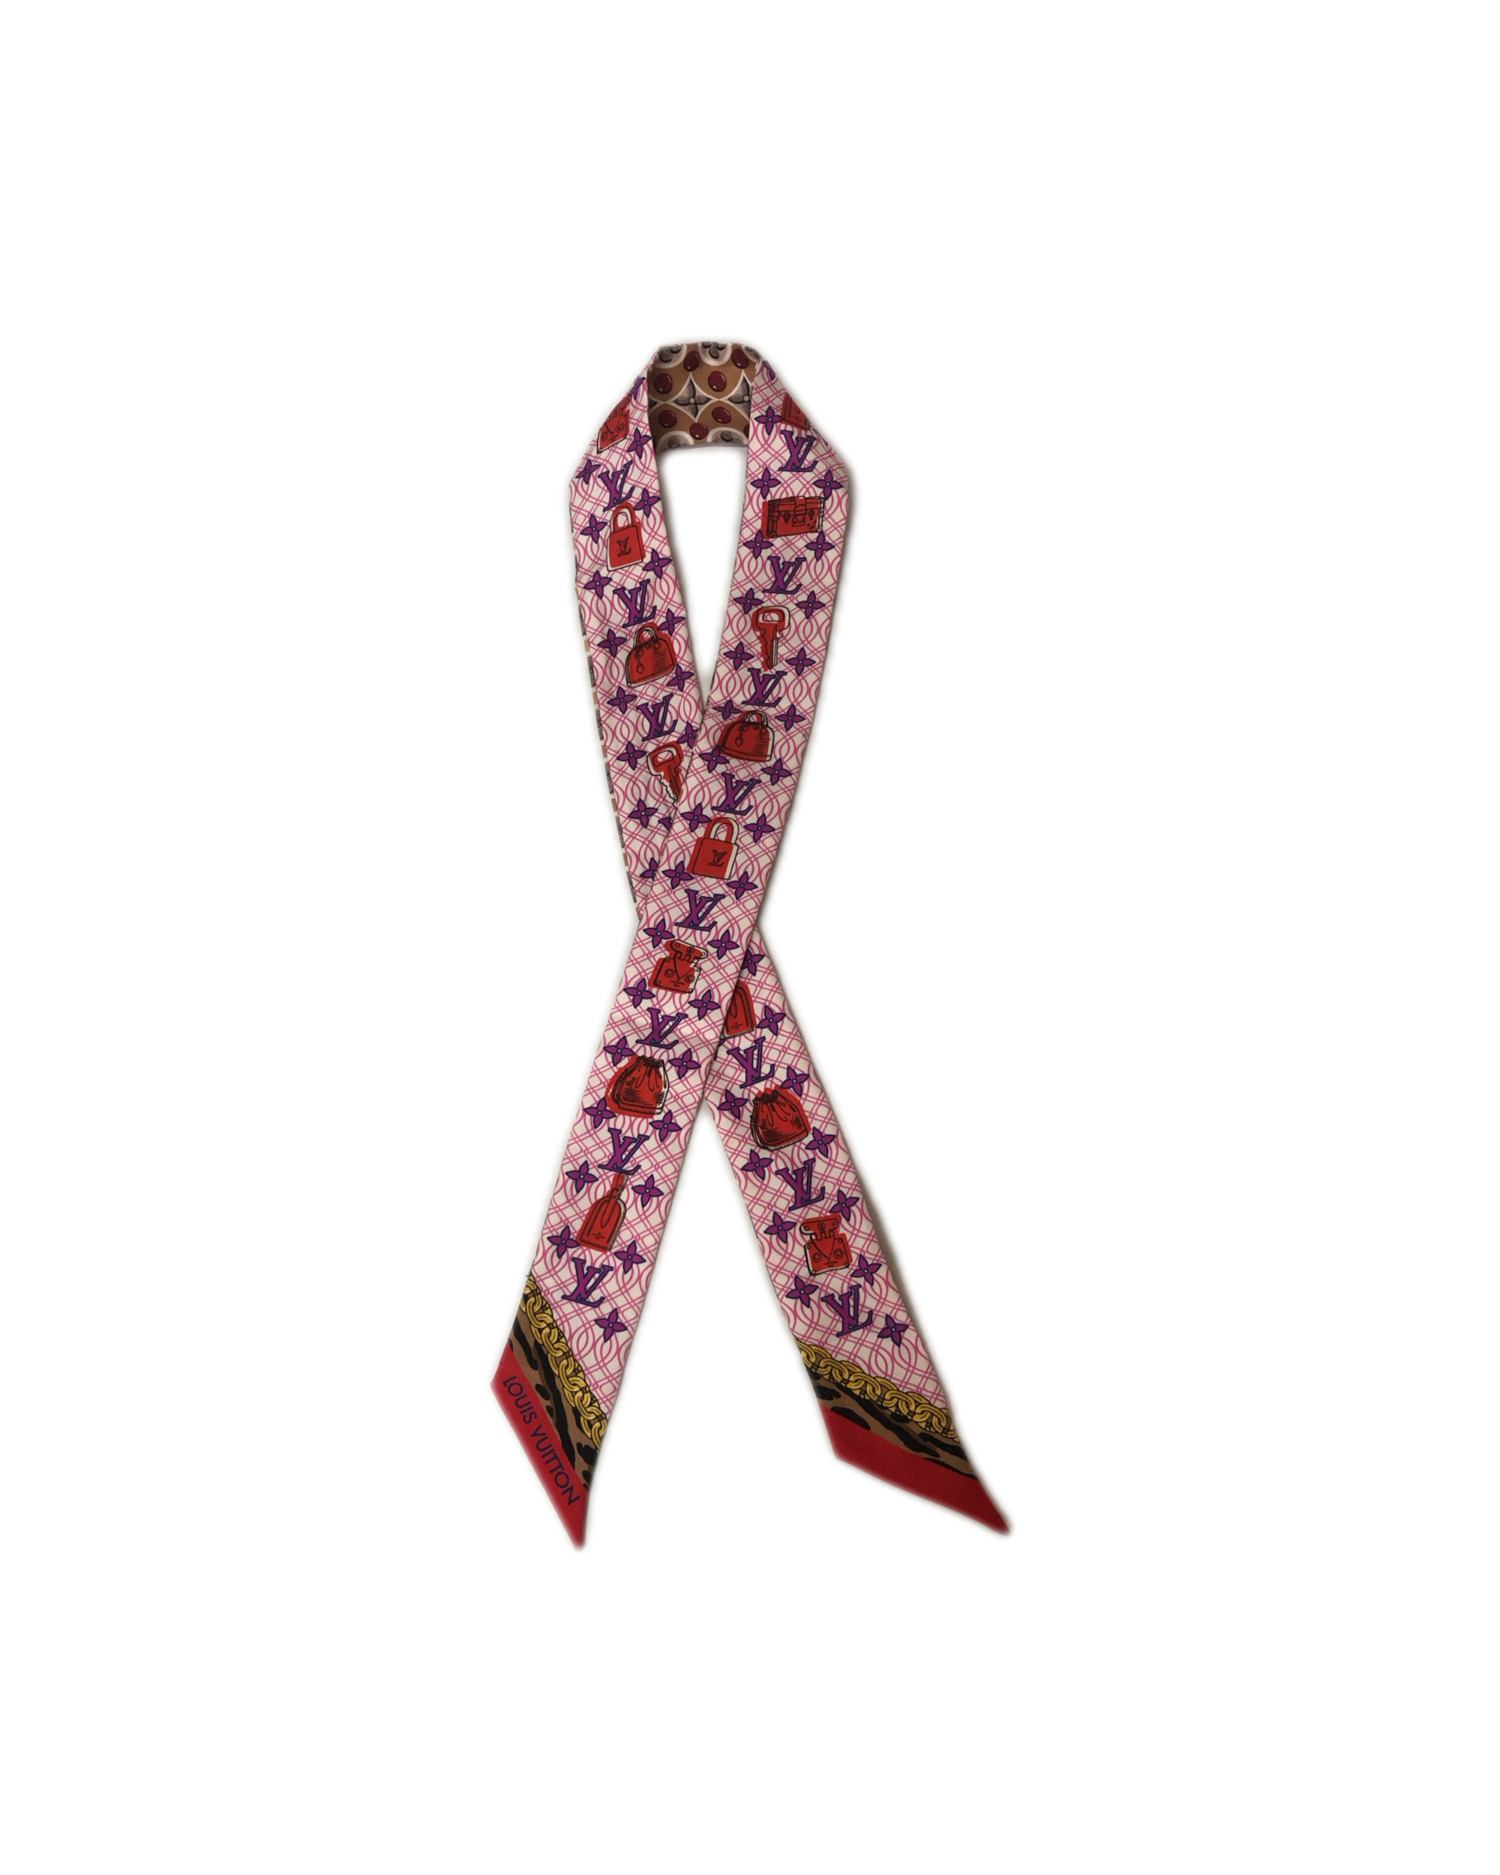 LOUIS VUITTON Black/Pink Printed Silk Bandeau Scarf